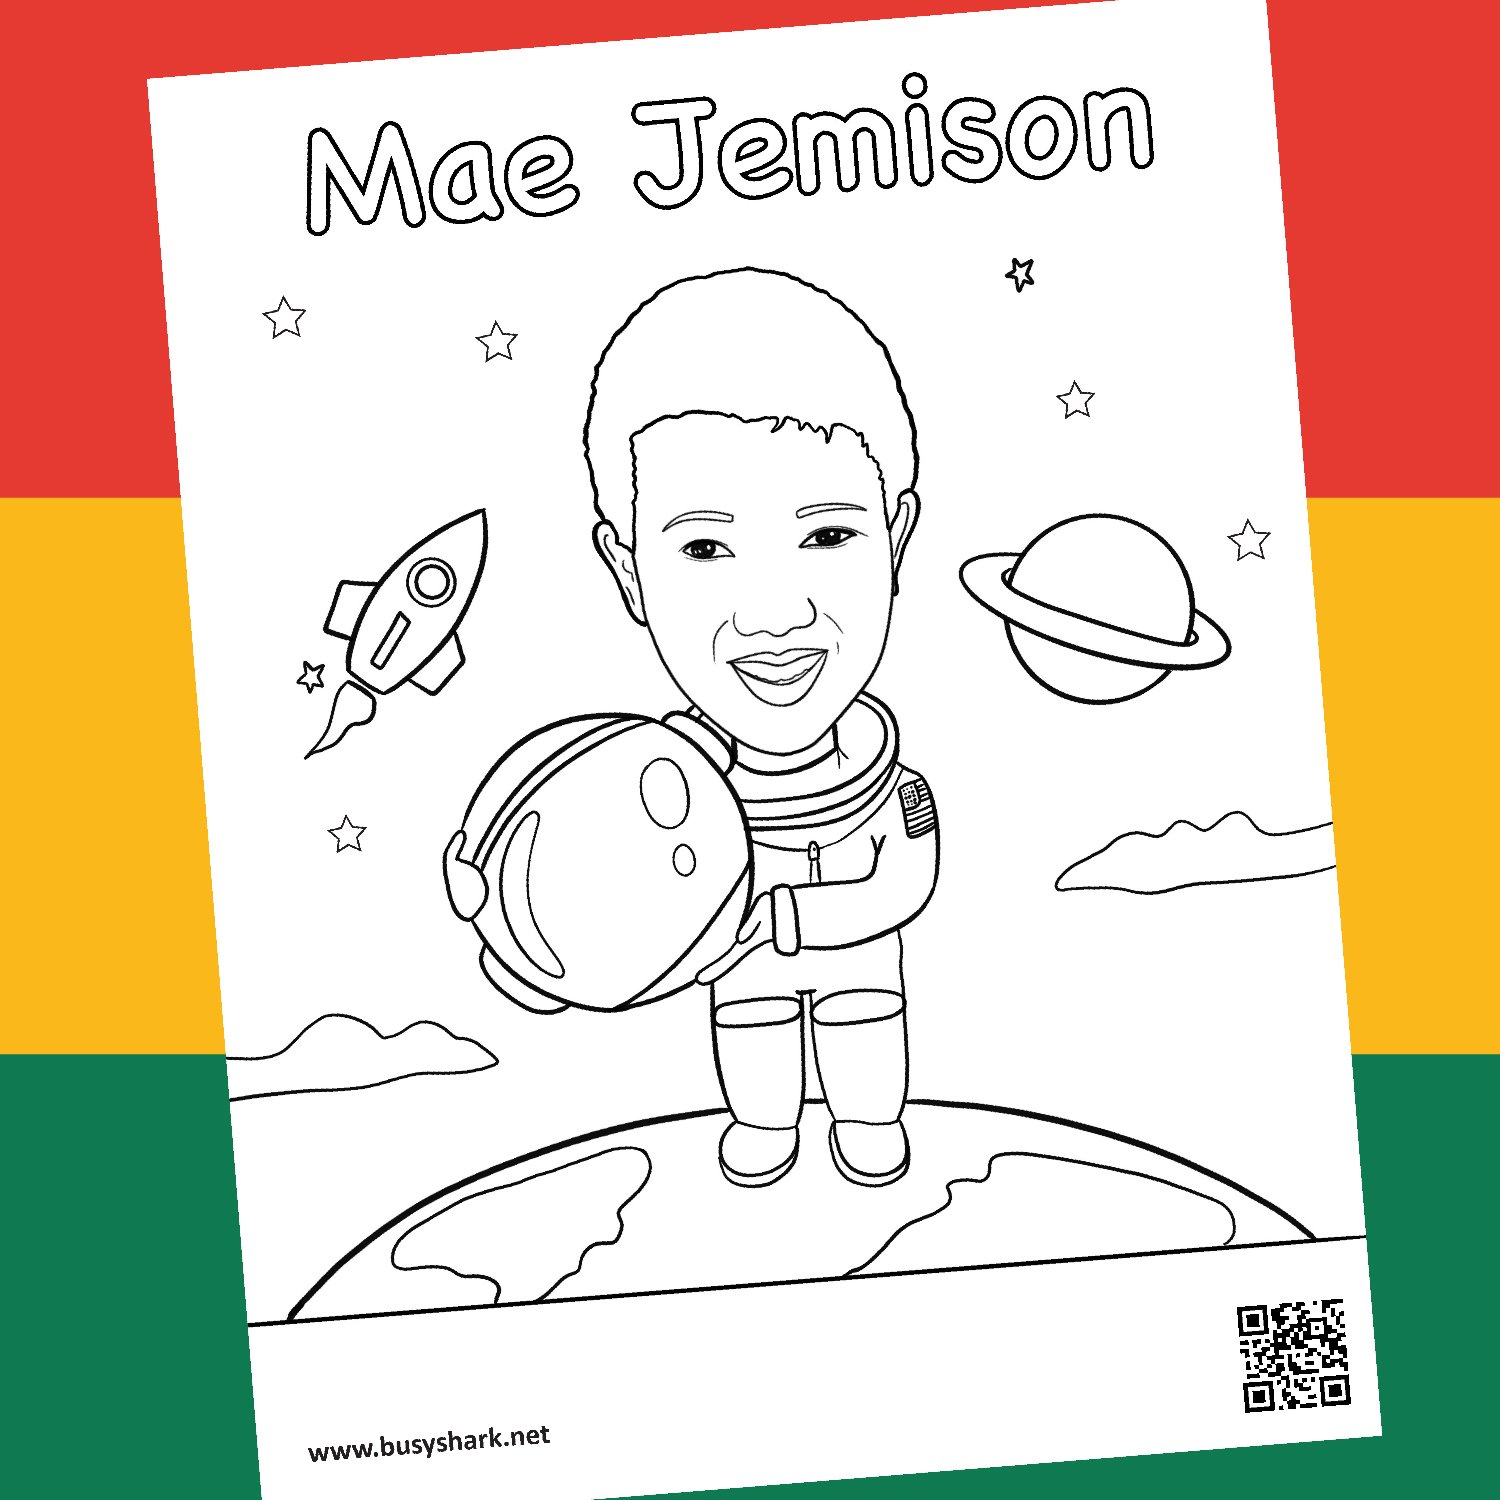 Mae jemison coloring page free printable